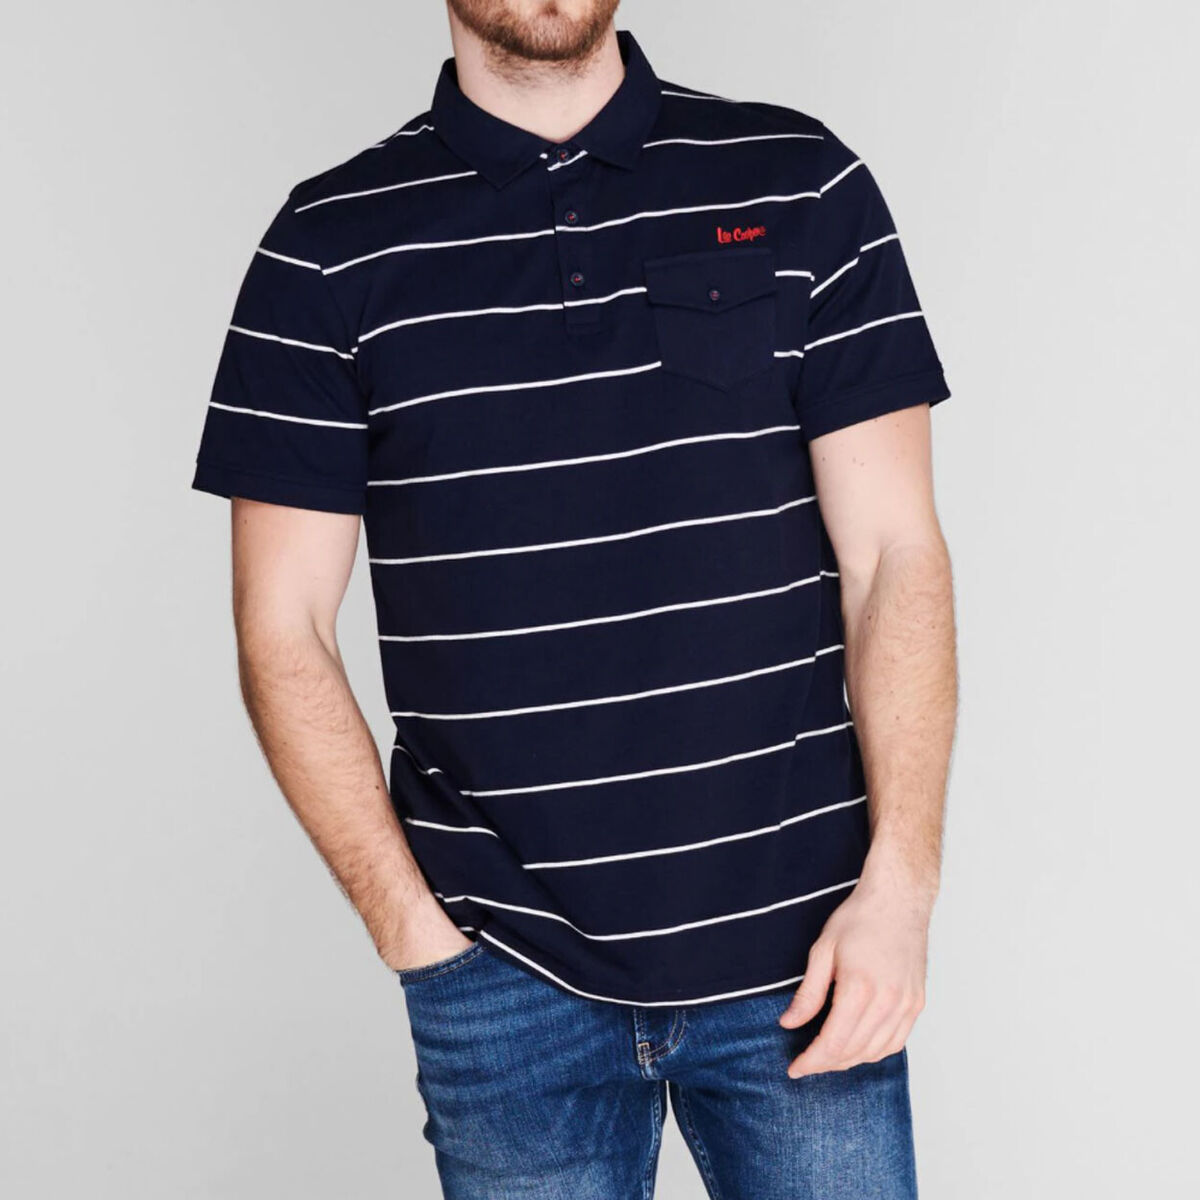 planer æggelederne bøf Lee Cooper Mens Polo Shirt Striped Short Sleeve Collar Casual Tee Tops  Branded | eBay